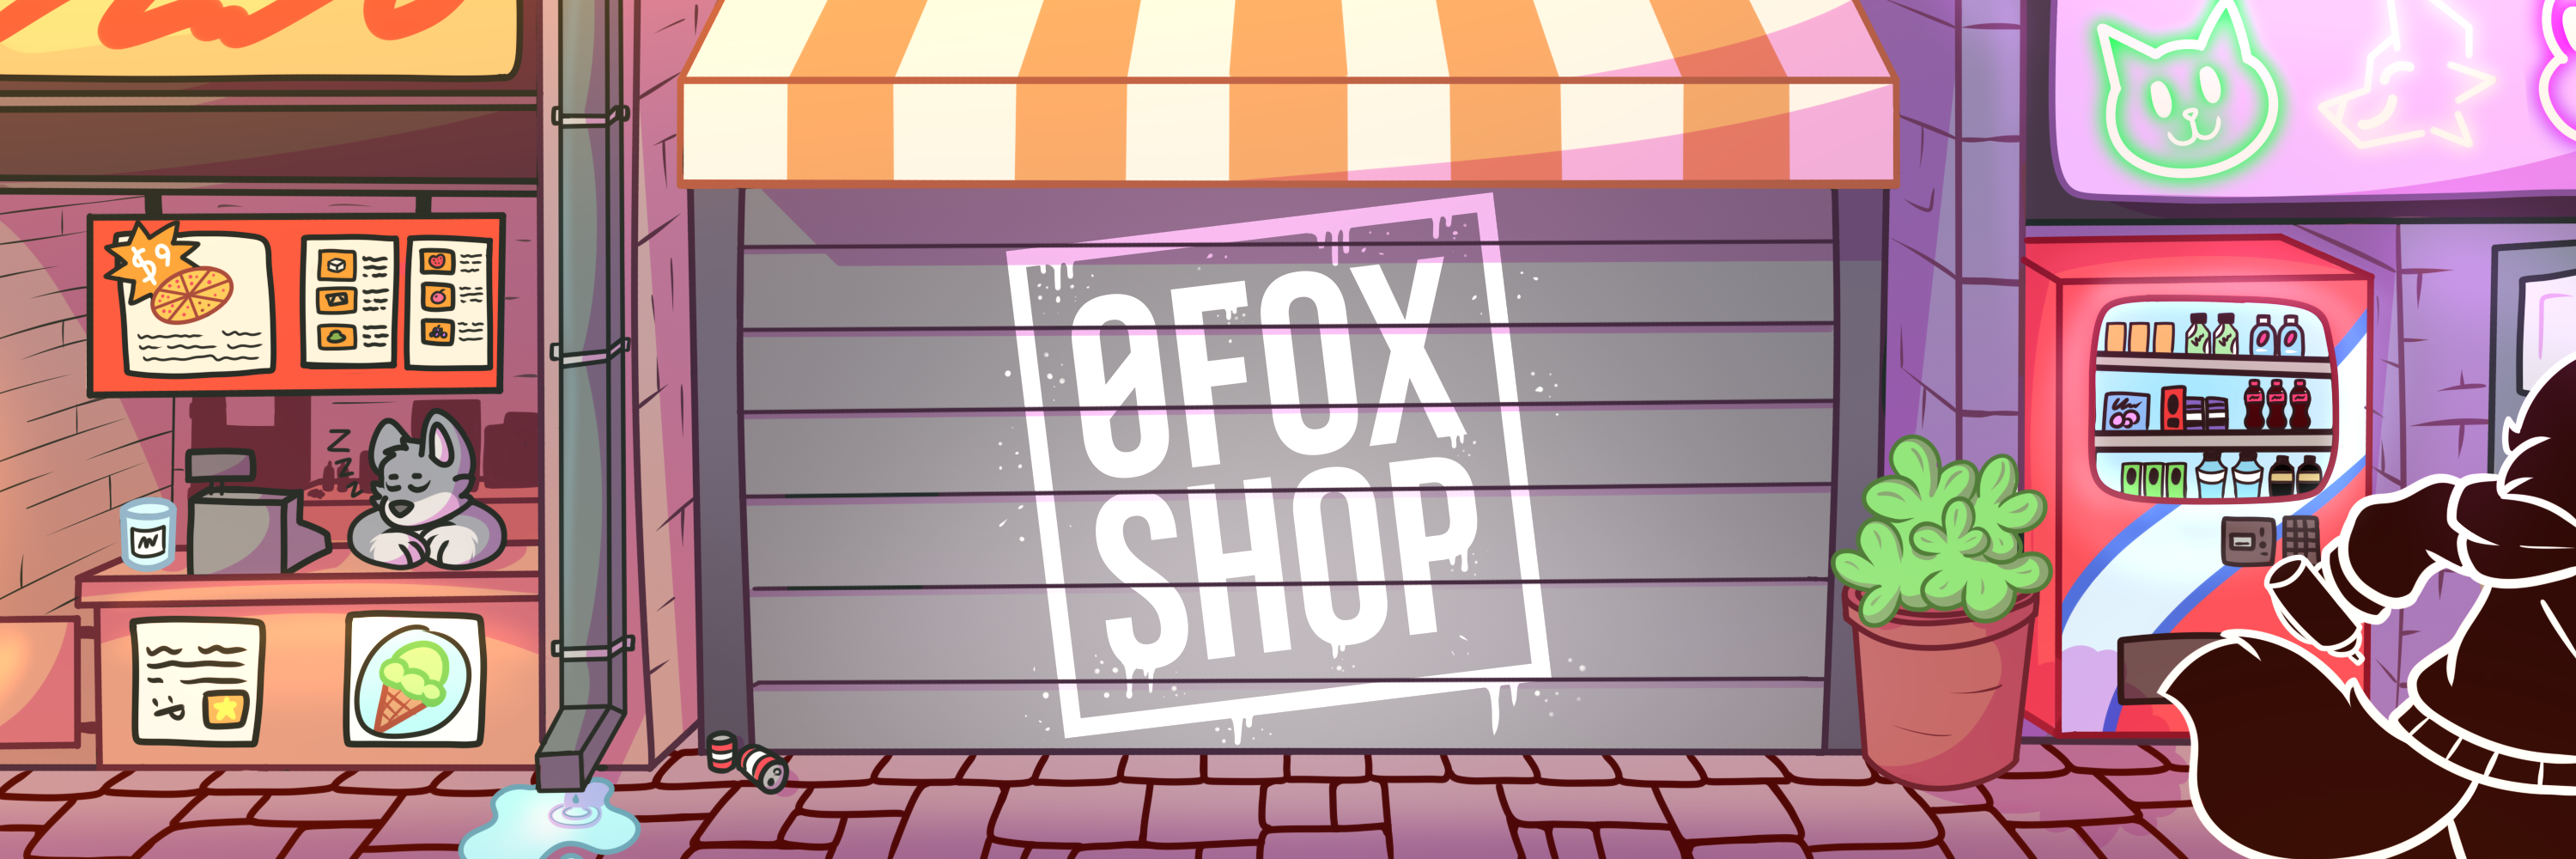 ACCESSORIES – 0 Fox Shop